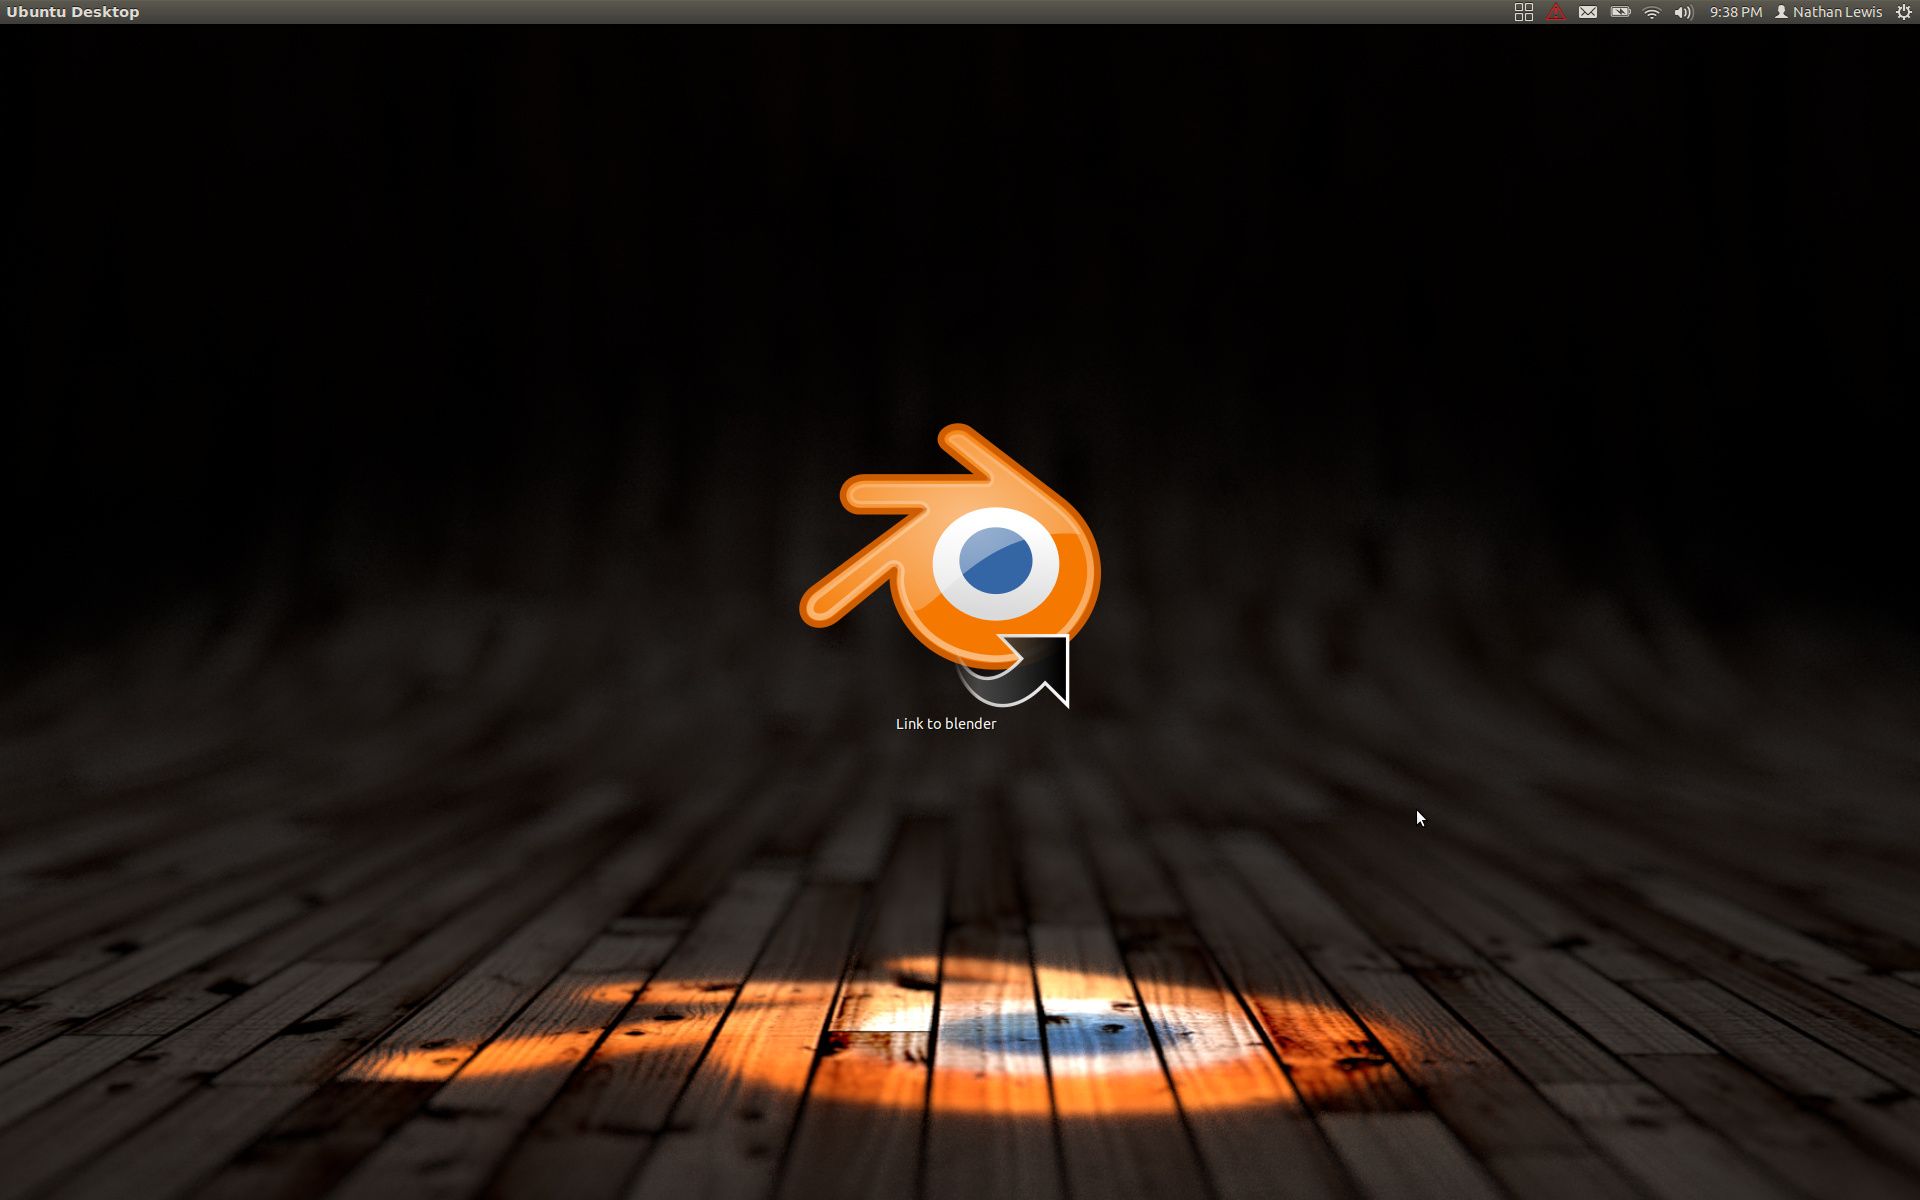 A new Ubuntu Blender Wallpaper Projects